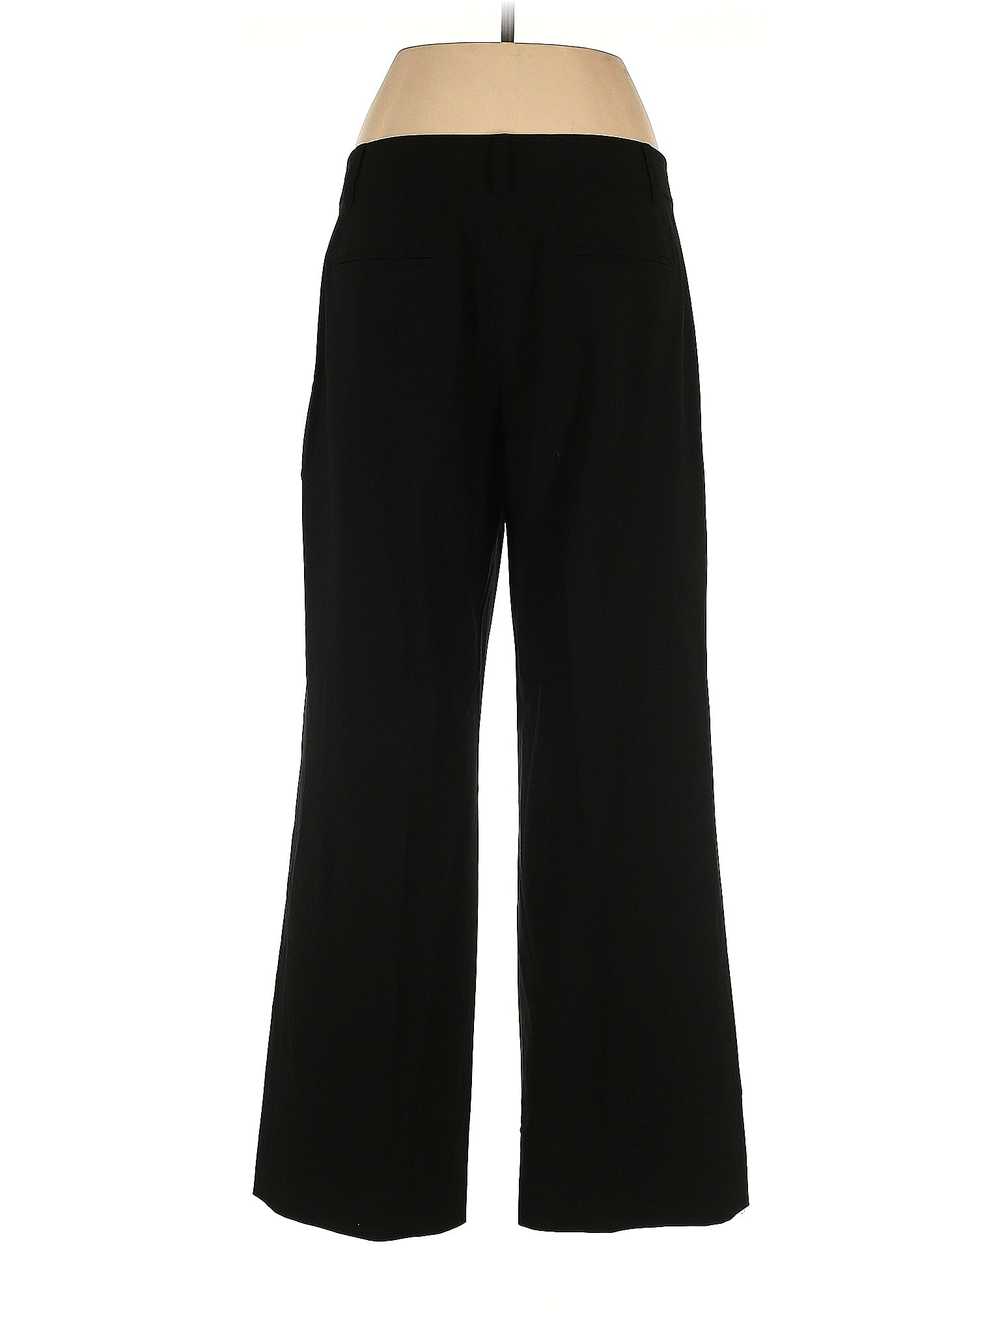 DKNY Women Black Wool Pants 10 - image 2